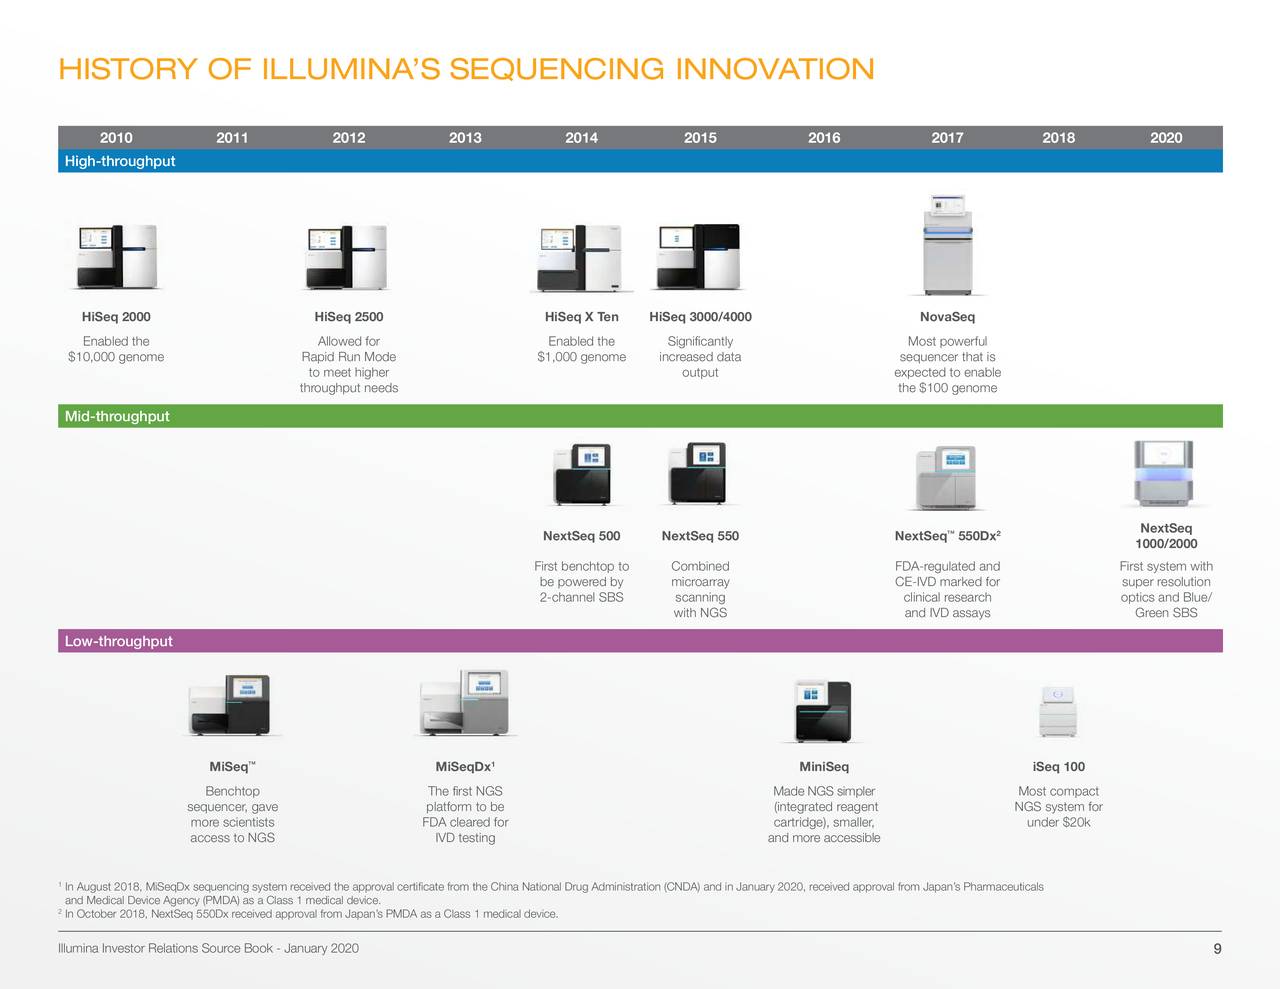 Illumina, Inc. 2019 Q4 Results Earnings Call Presentation (NASDAQ